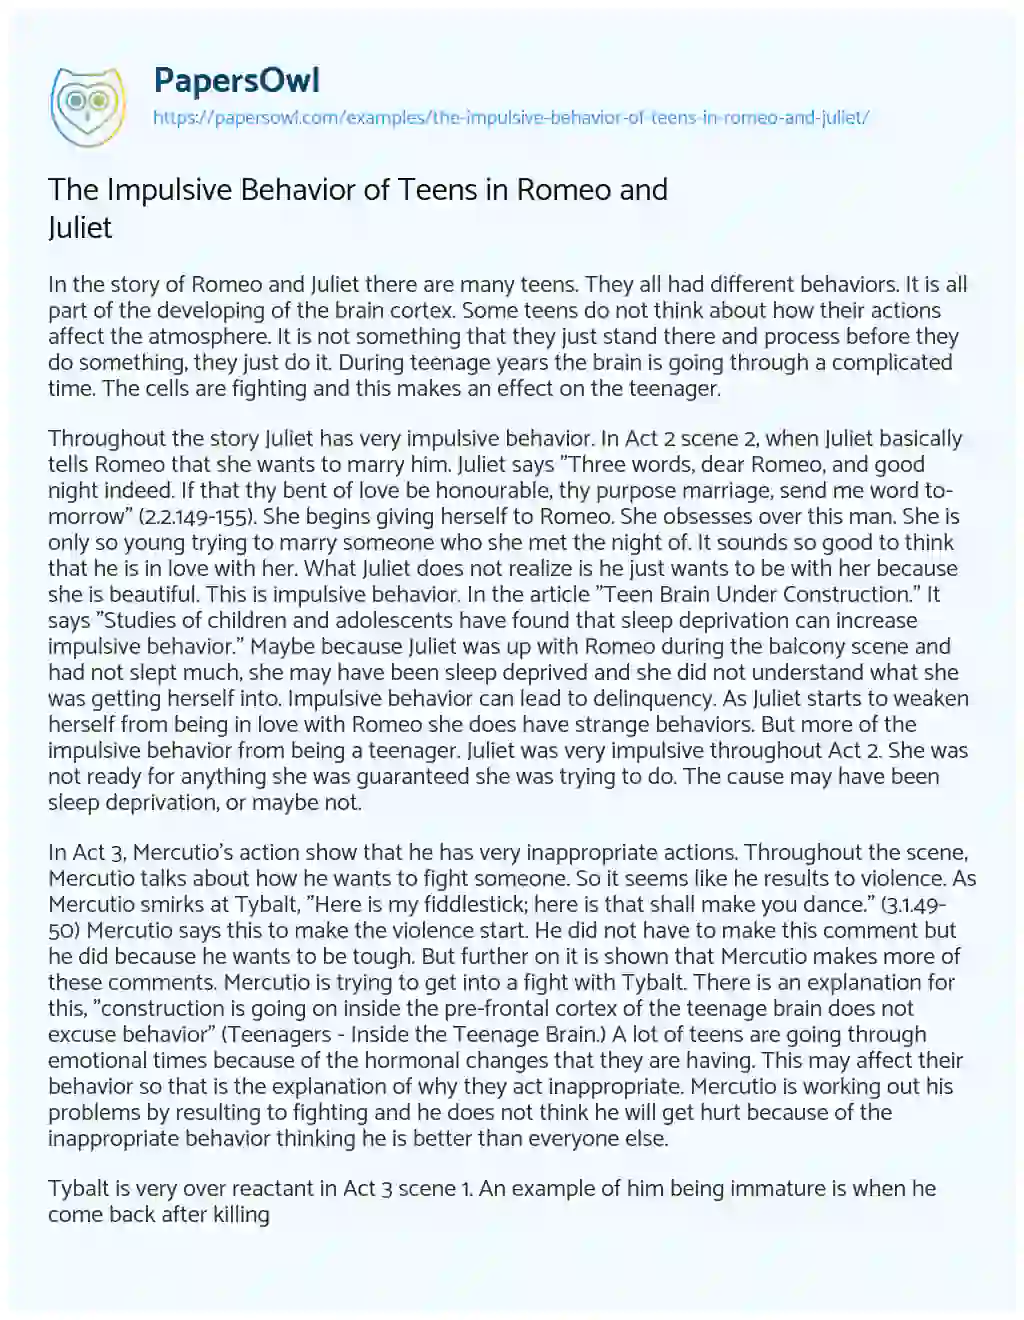 Essay on The Impulsive Behavior of Teens in Romeo and Juliet